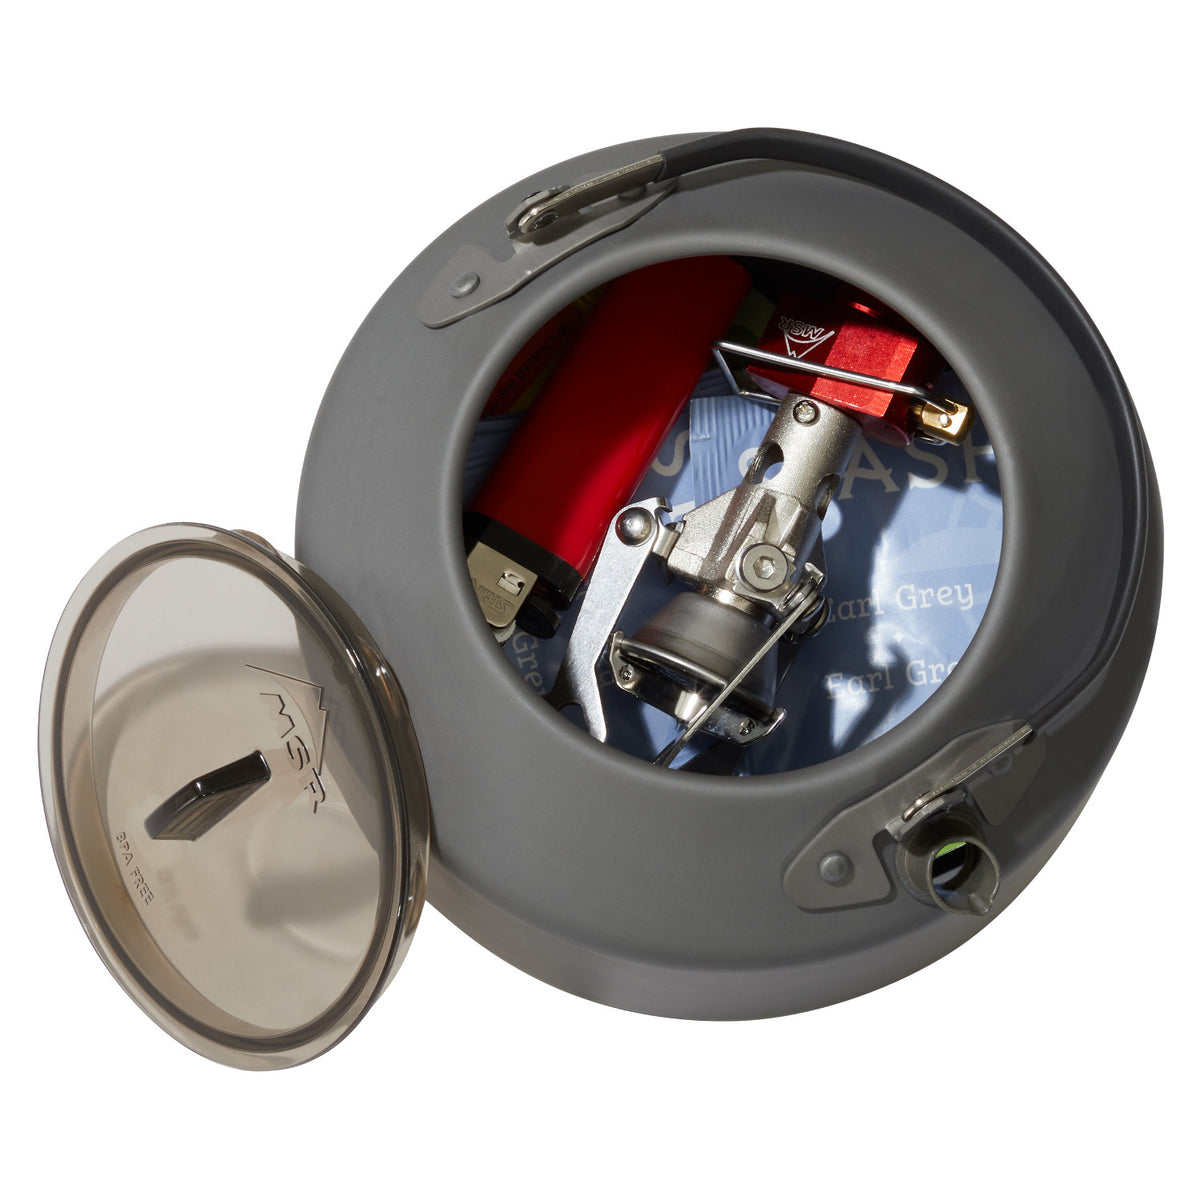 MSR Pika 1.0L Teapot, inside view showing stove storage option